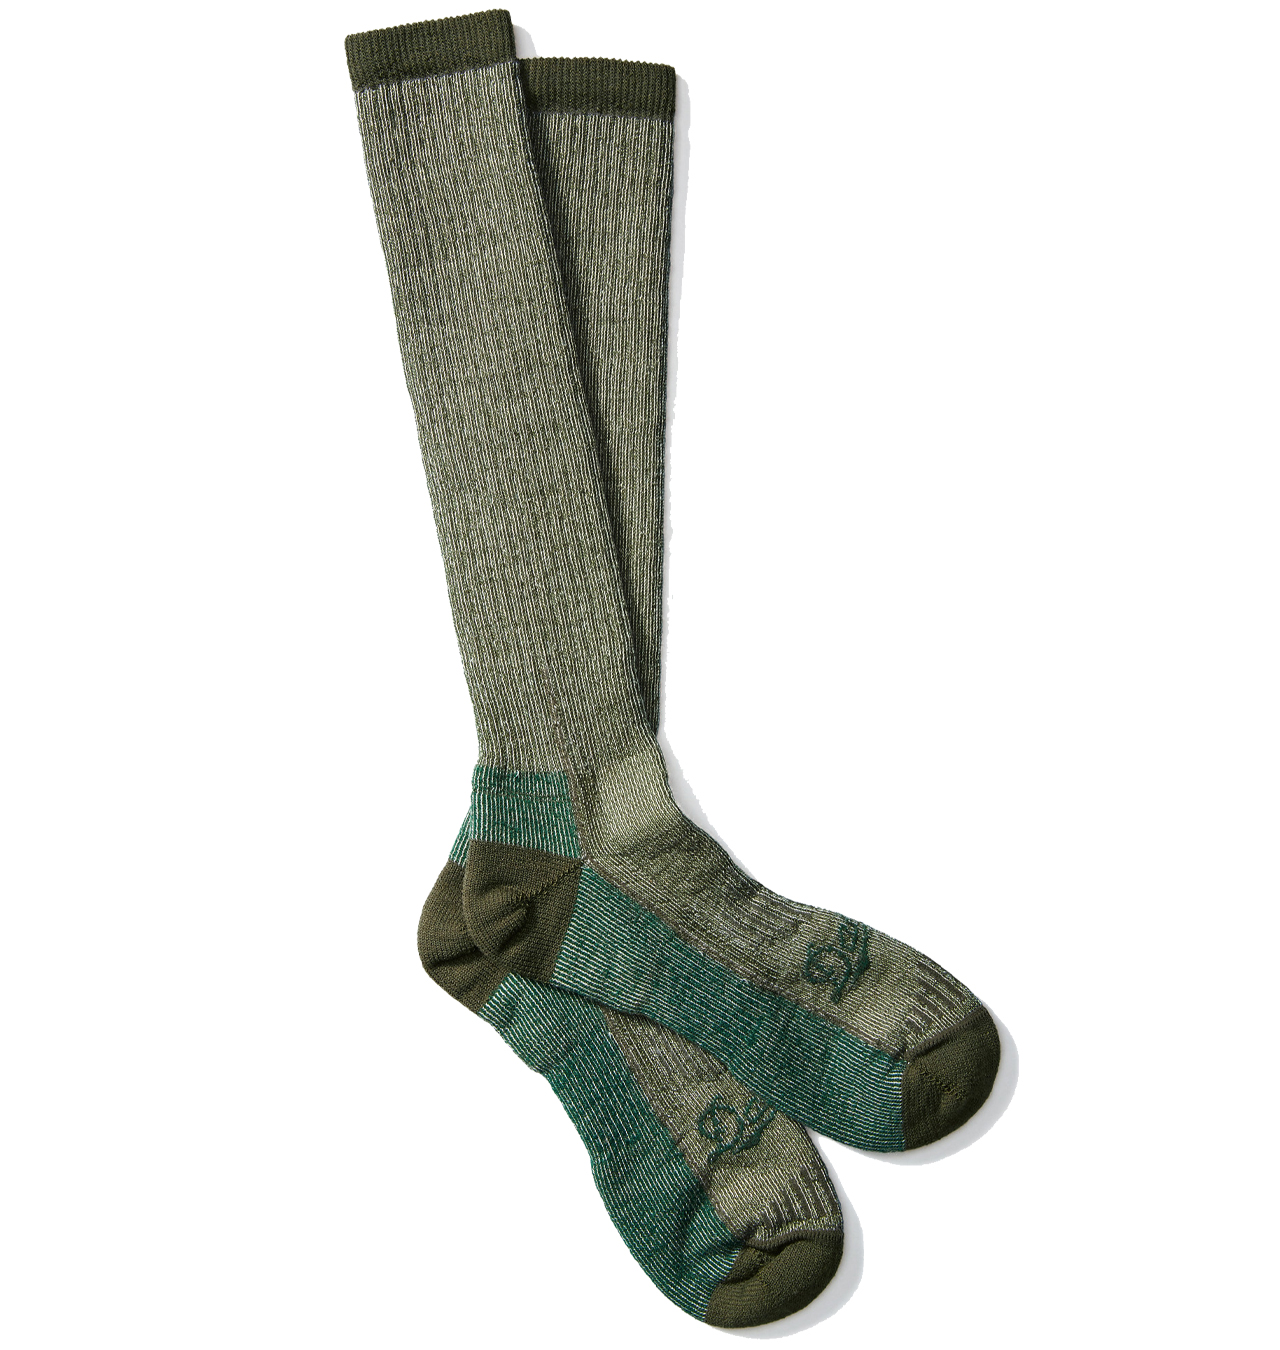 Danner - Danner Merino Midweight Hunting Socks (Over Calf) - Green